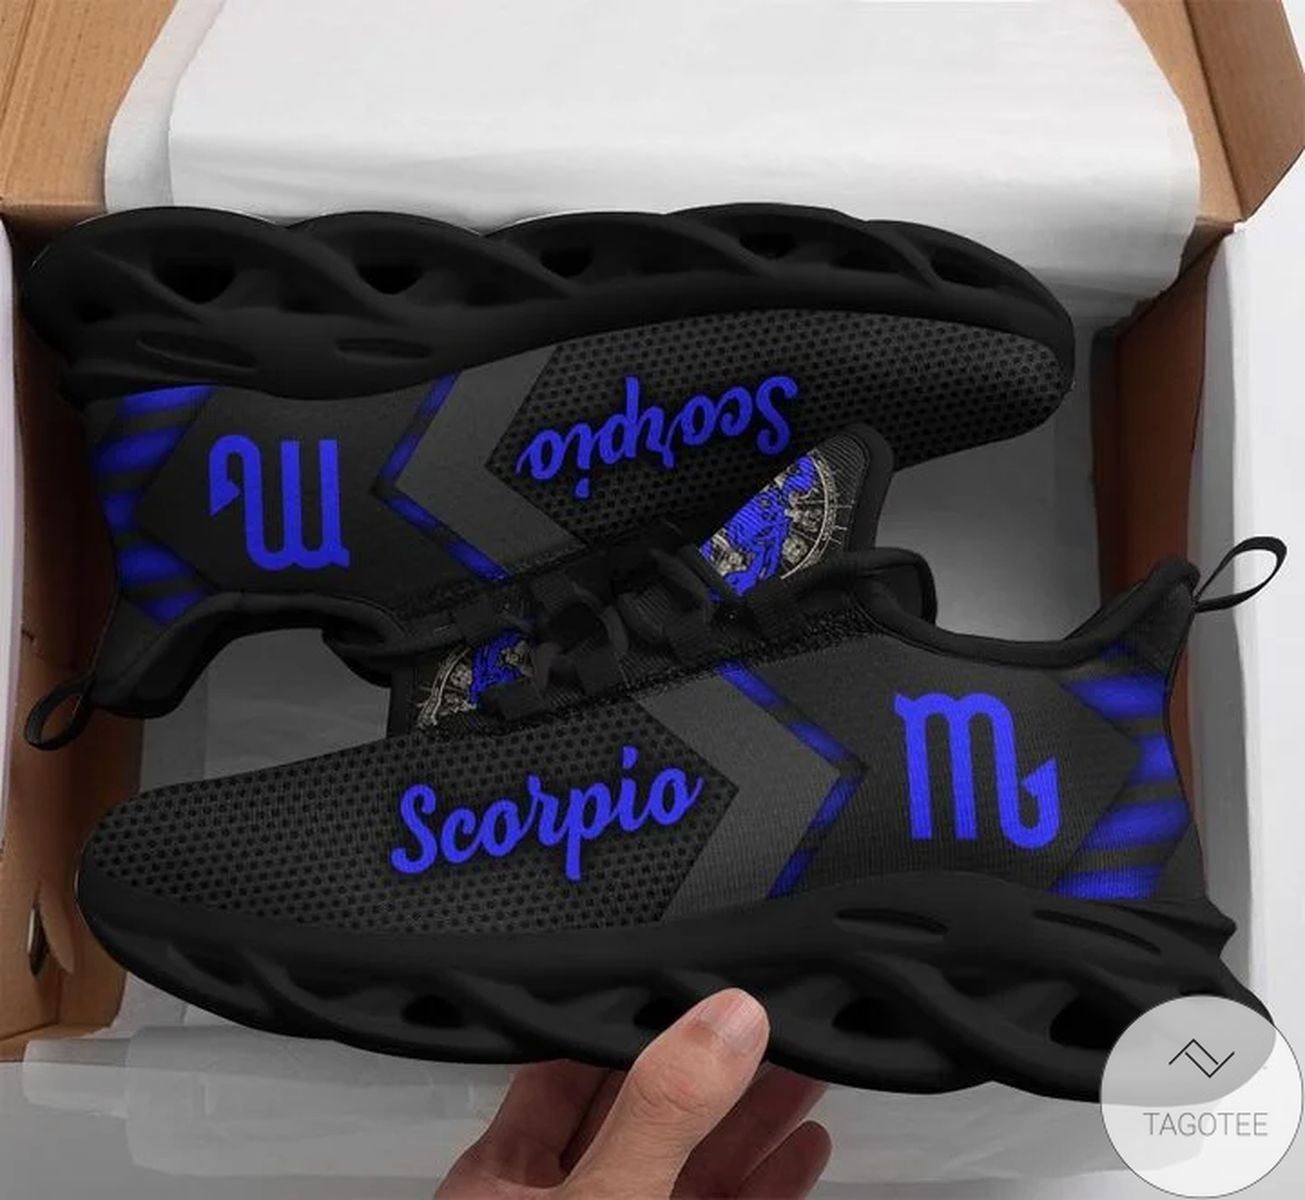 Scorpio Sneaker Max Soul Shoes